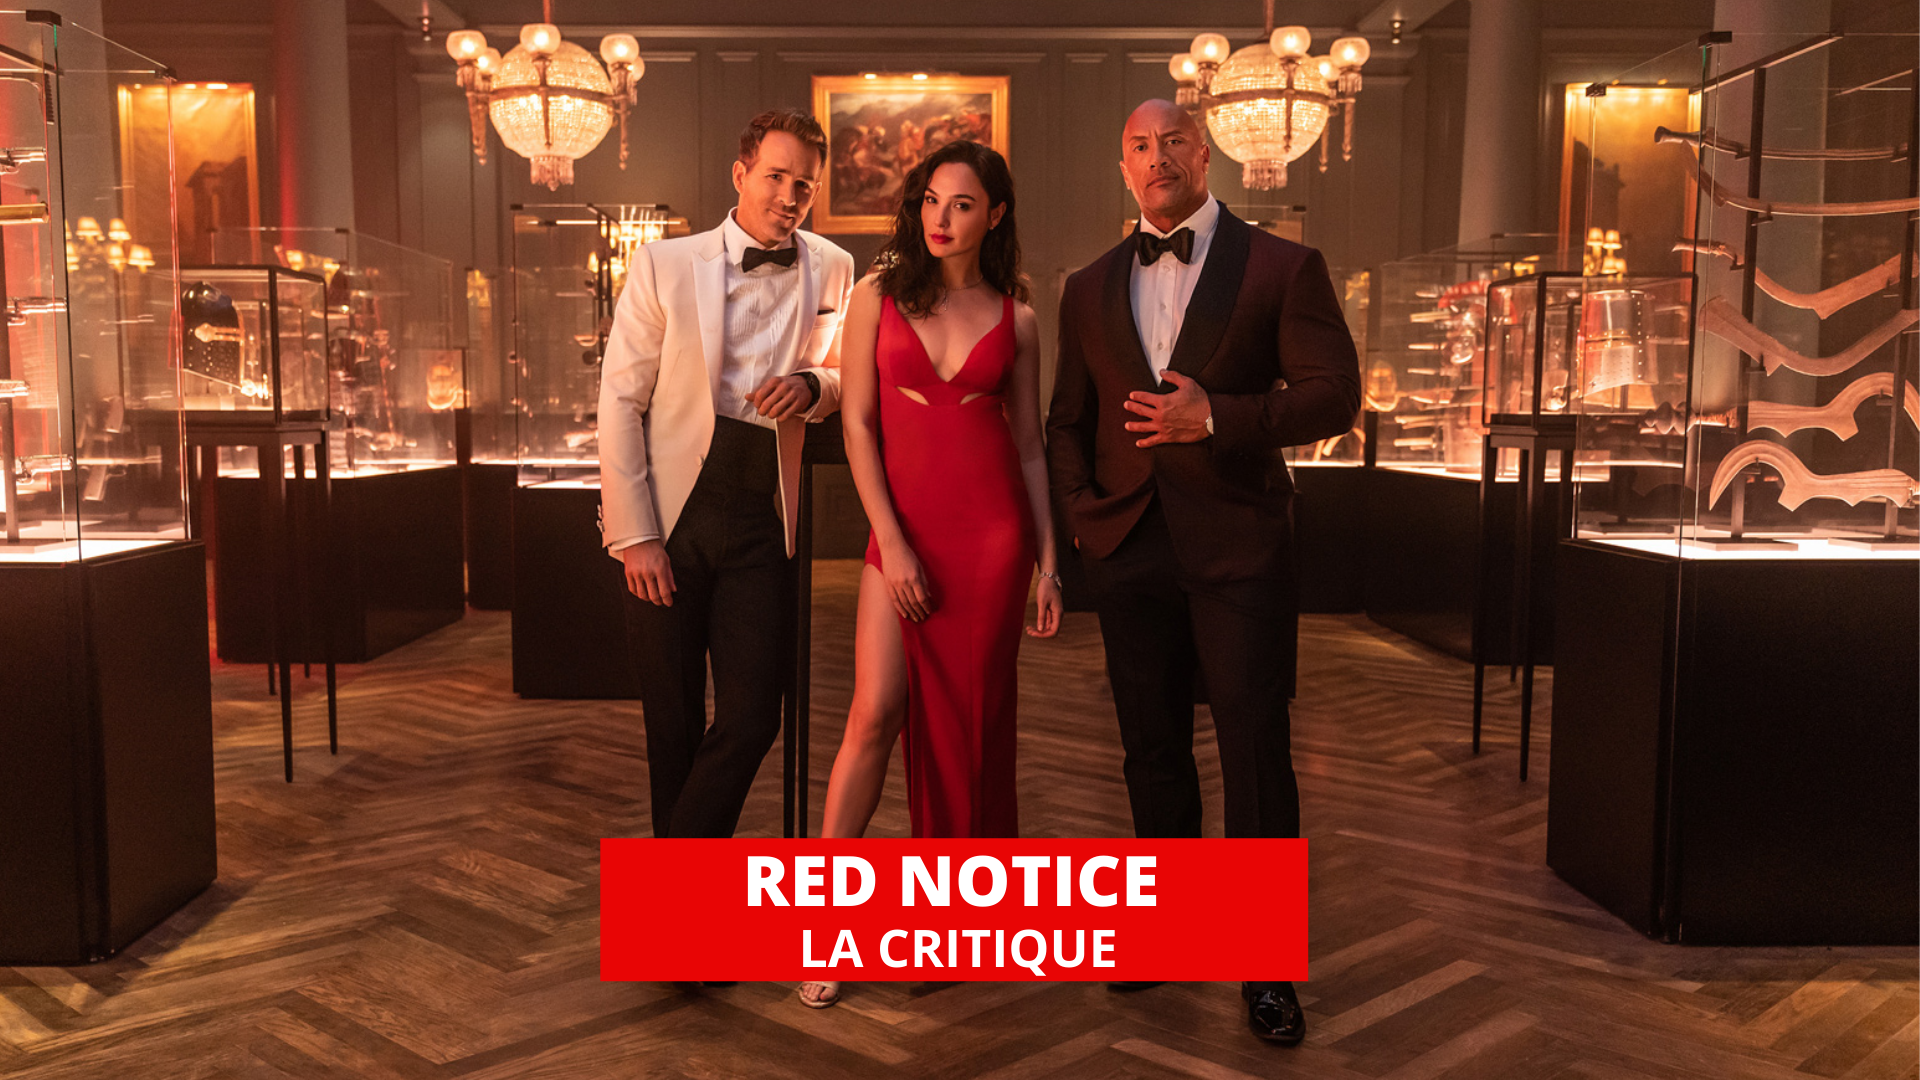 Red Notice : buddy movie classique mais efficace façon Ryan Reynolds